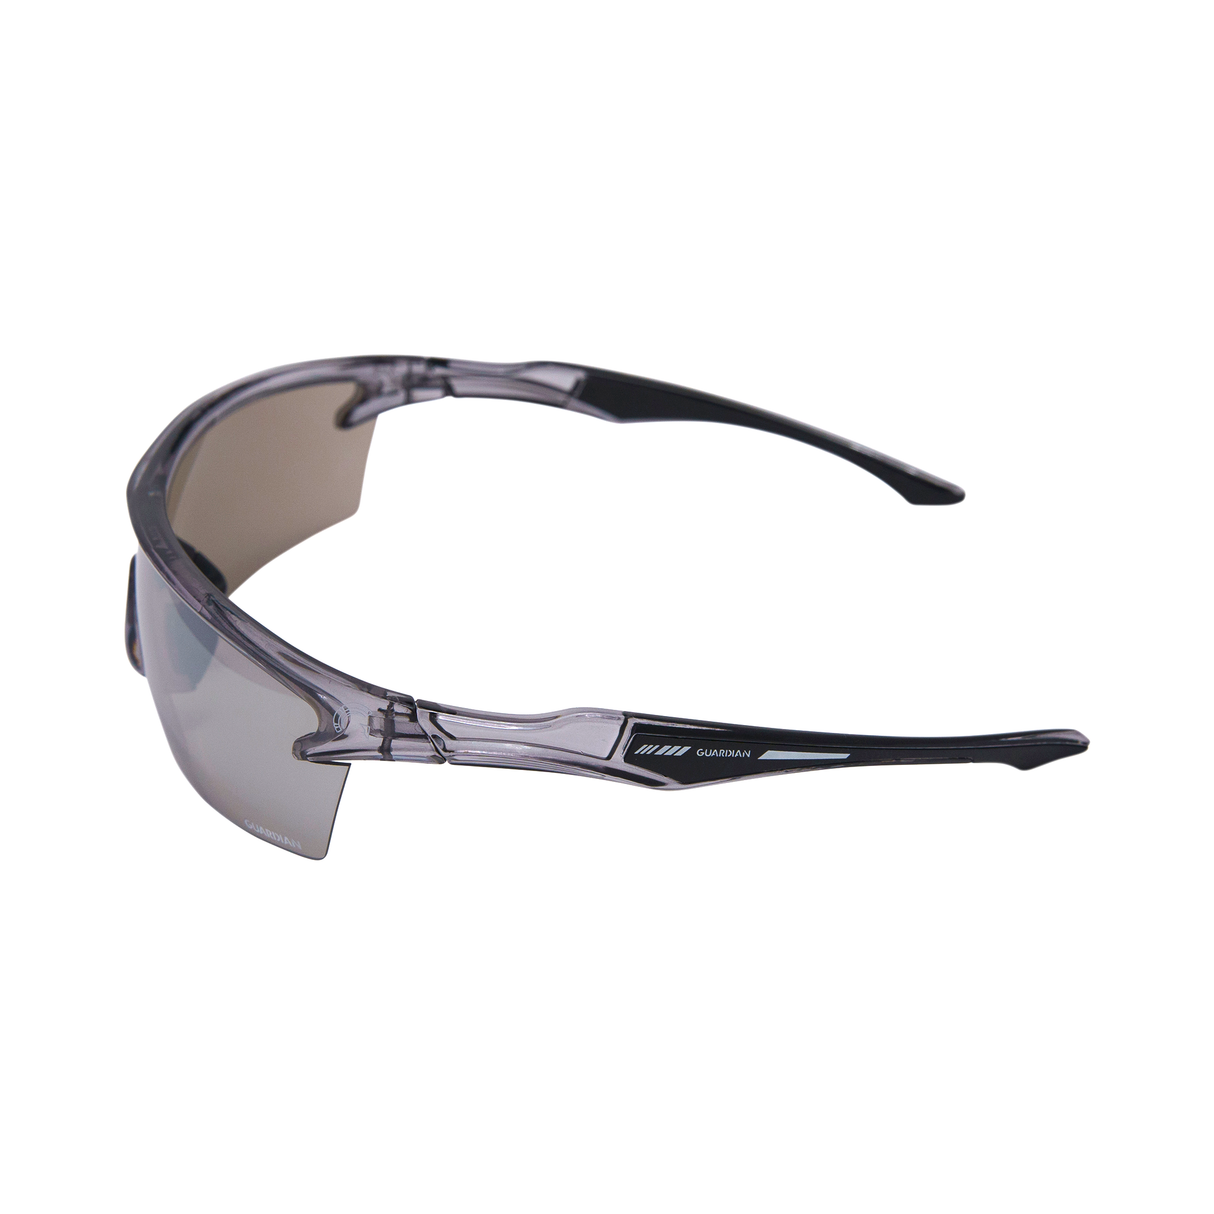 Guardian Baseball Baseball Sunglasses - Adult size, Grey/Grey